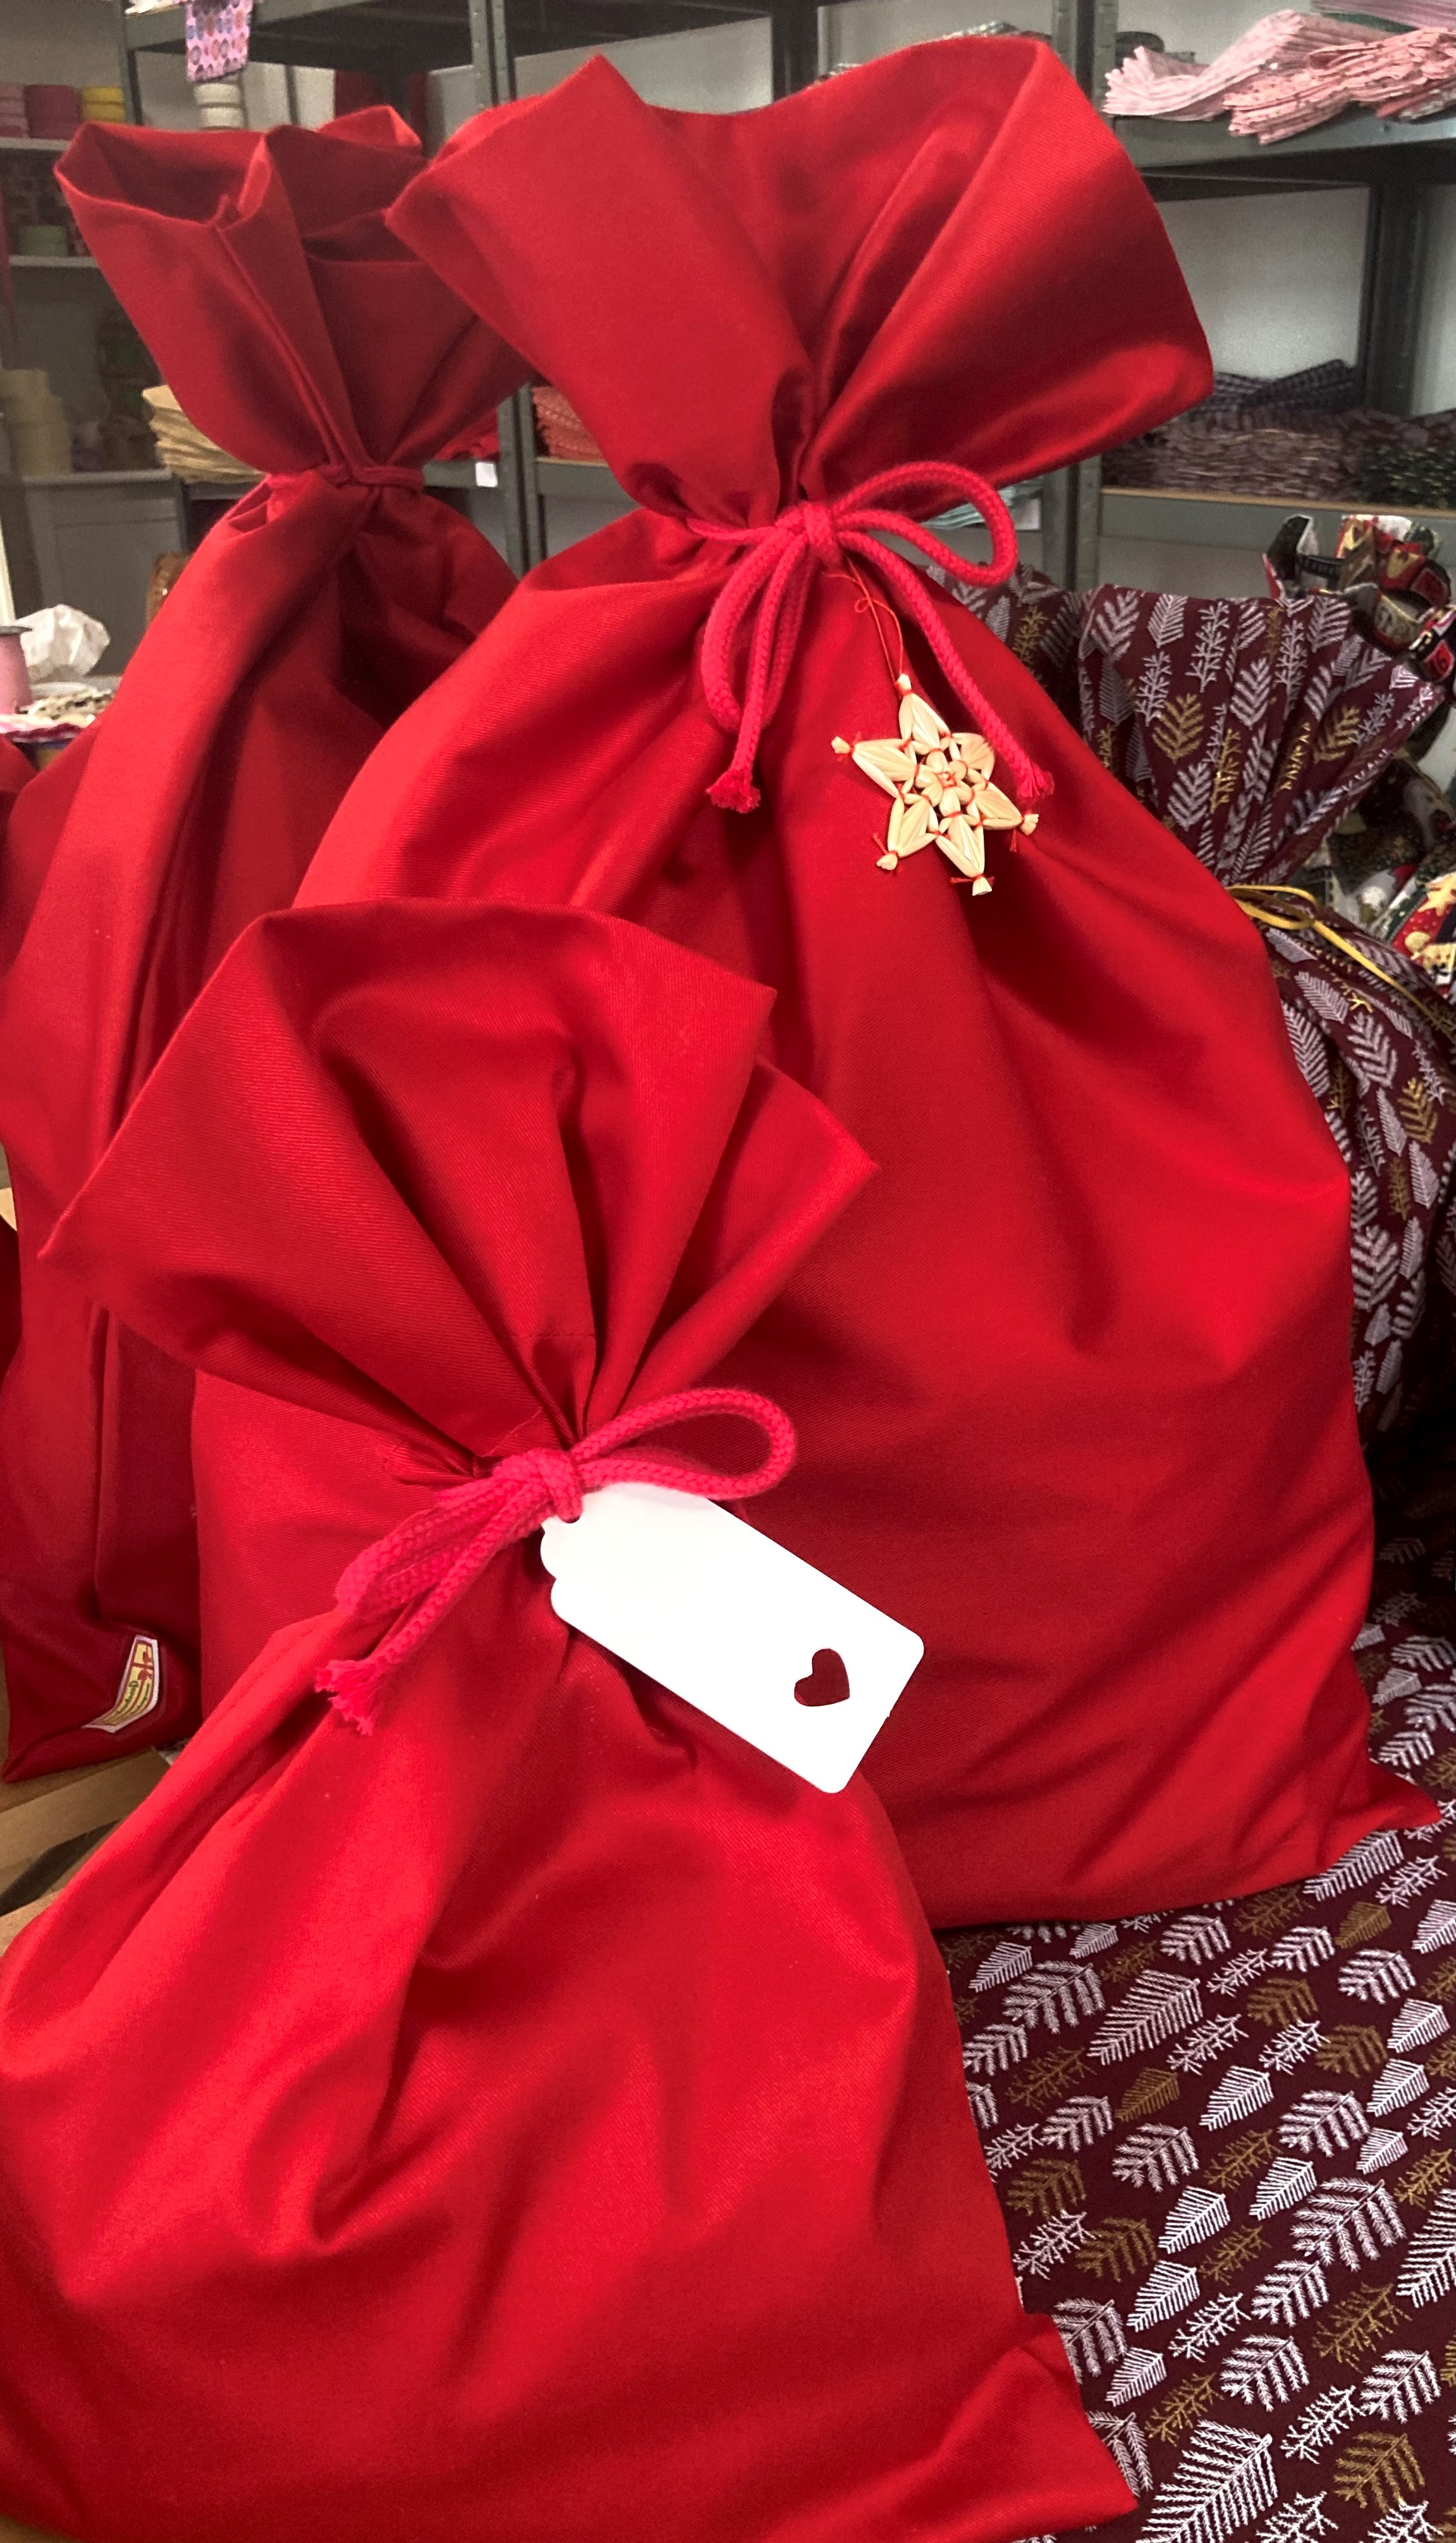 All Plain Red Gift Cloth Sacks, XL & L & Bottle